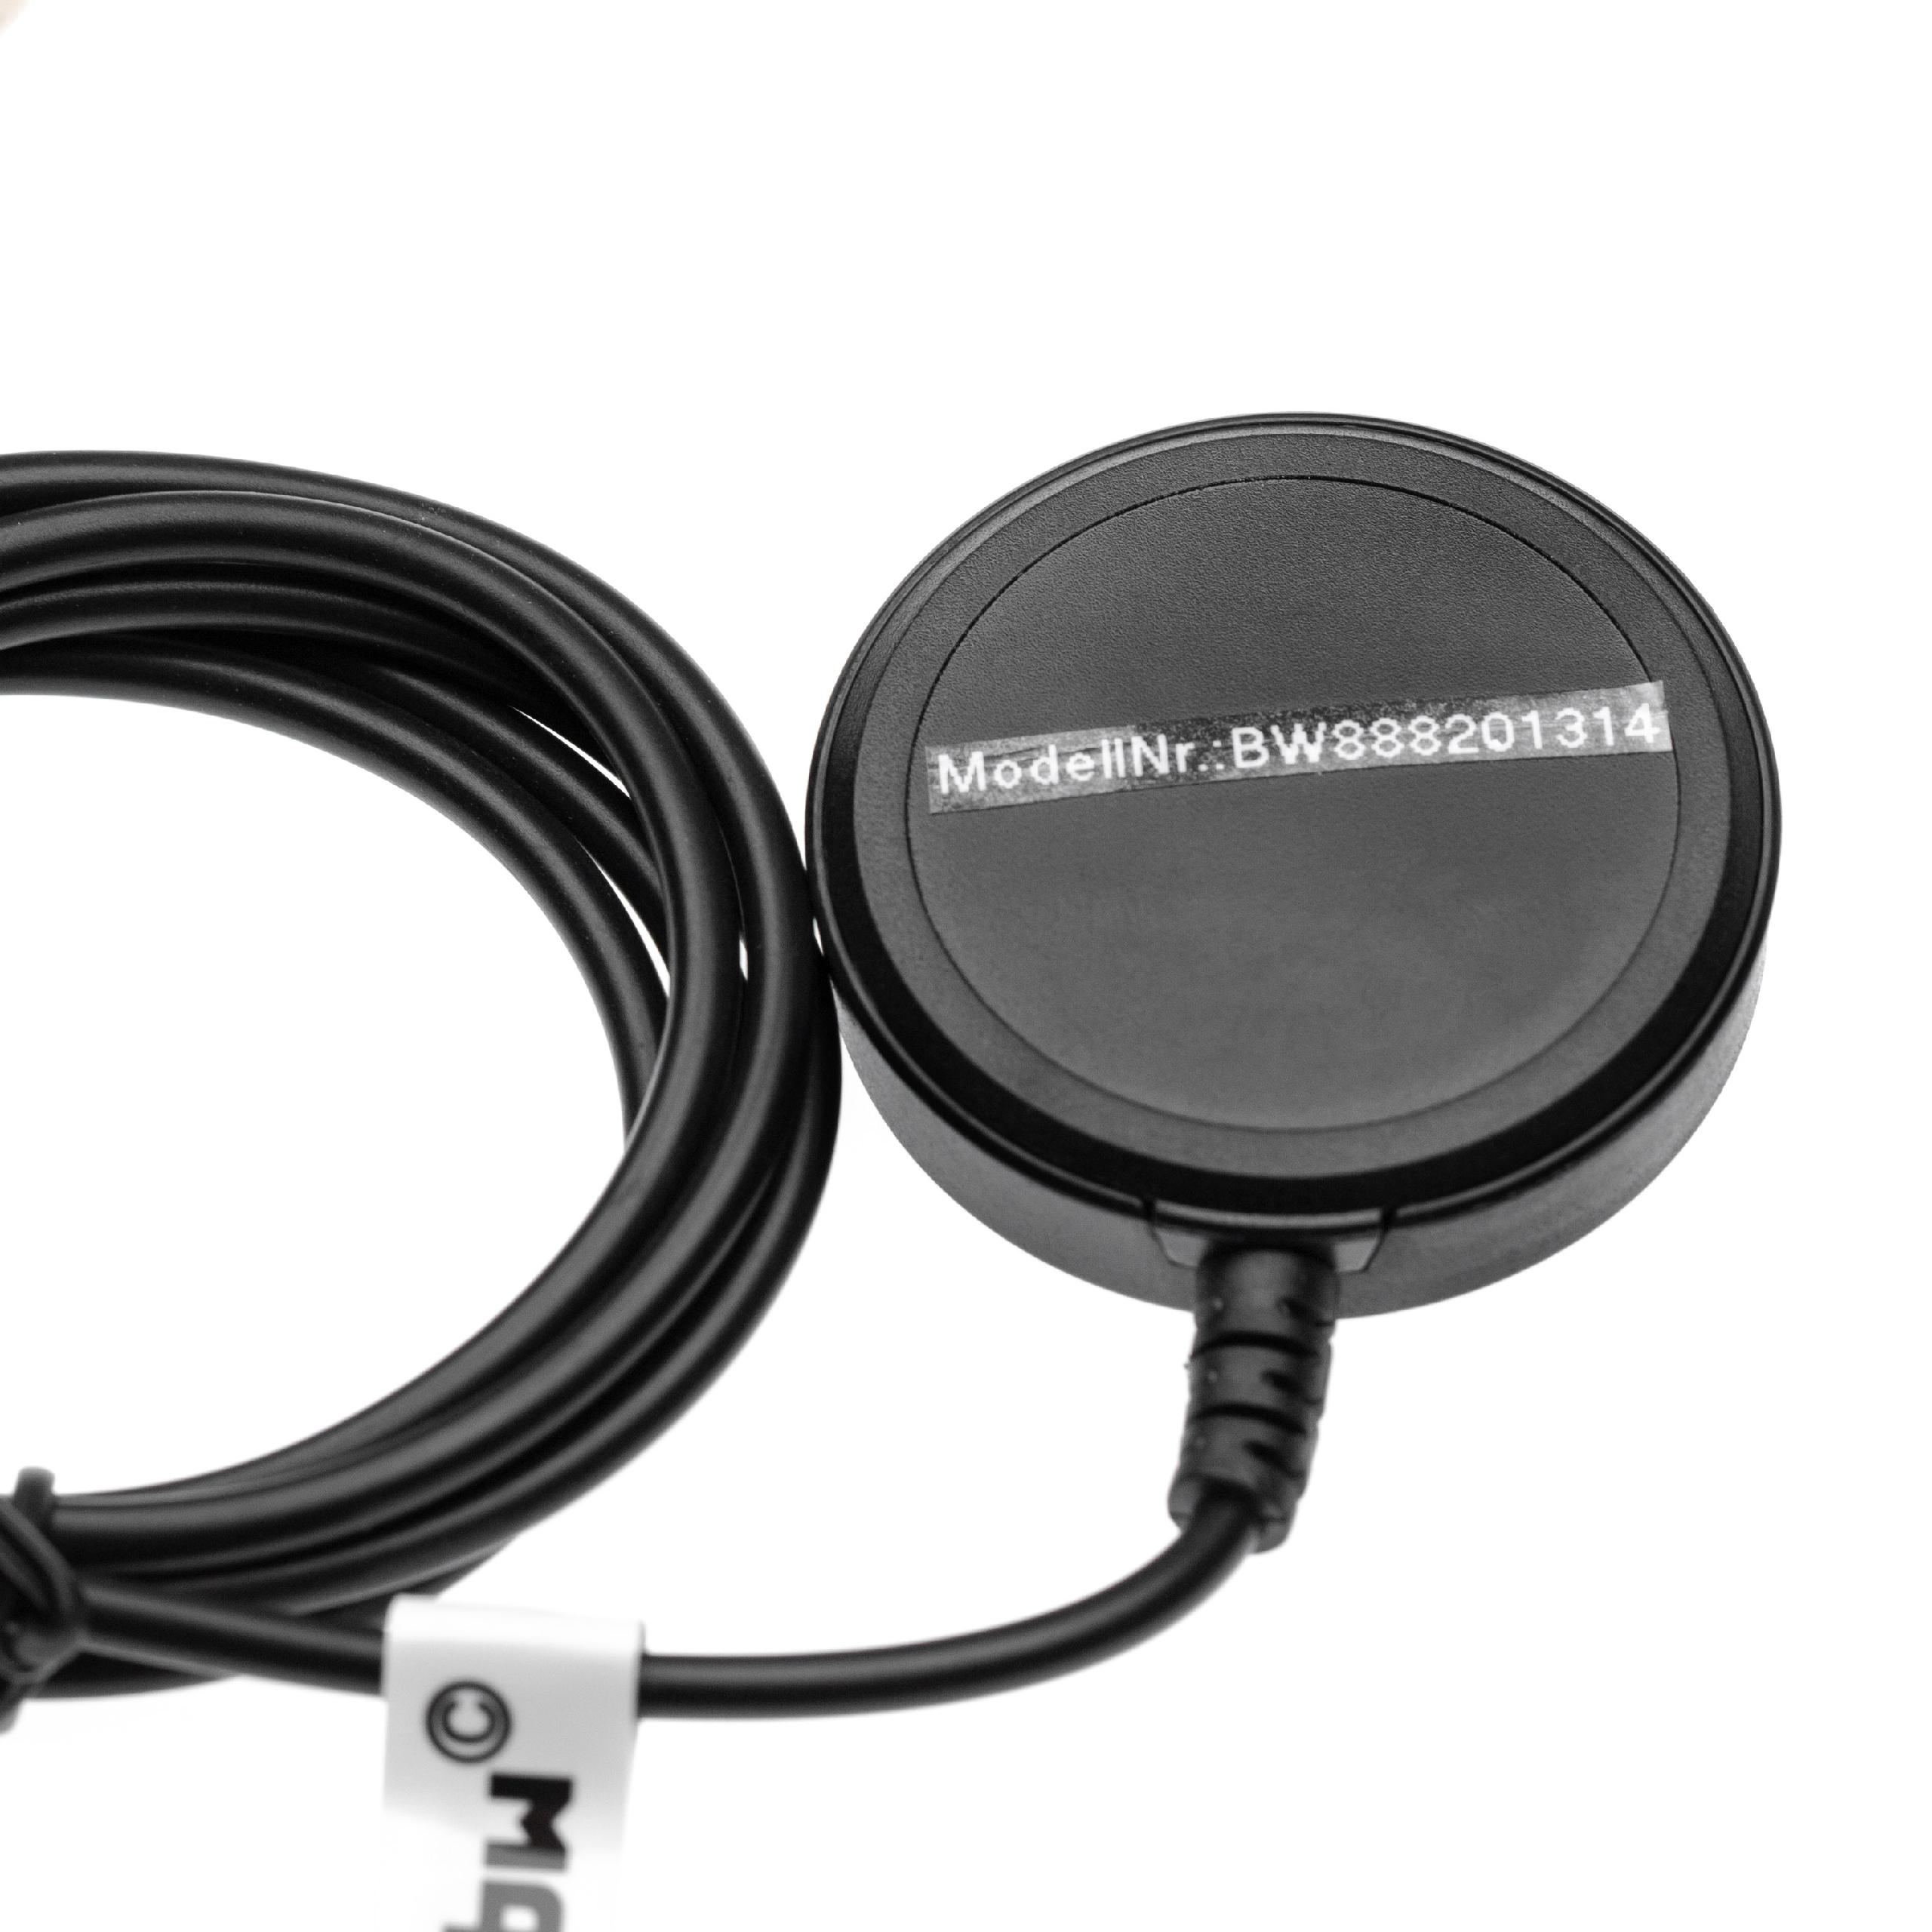 Cable de carga USB para smartwatch Huawei Watch GT2 - negro magnético 98 cm